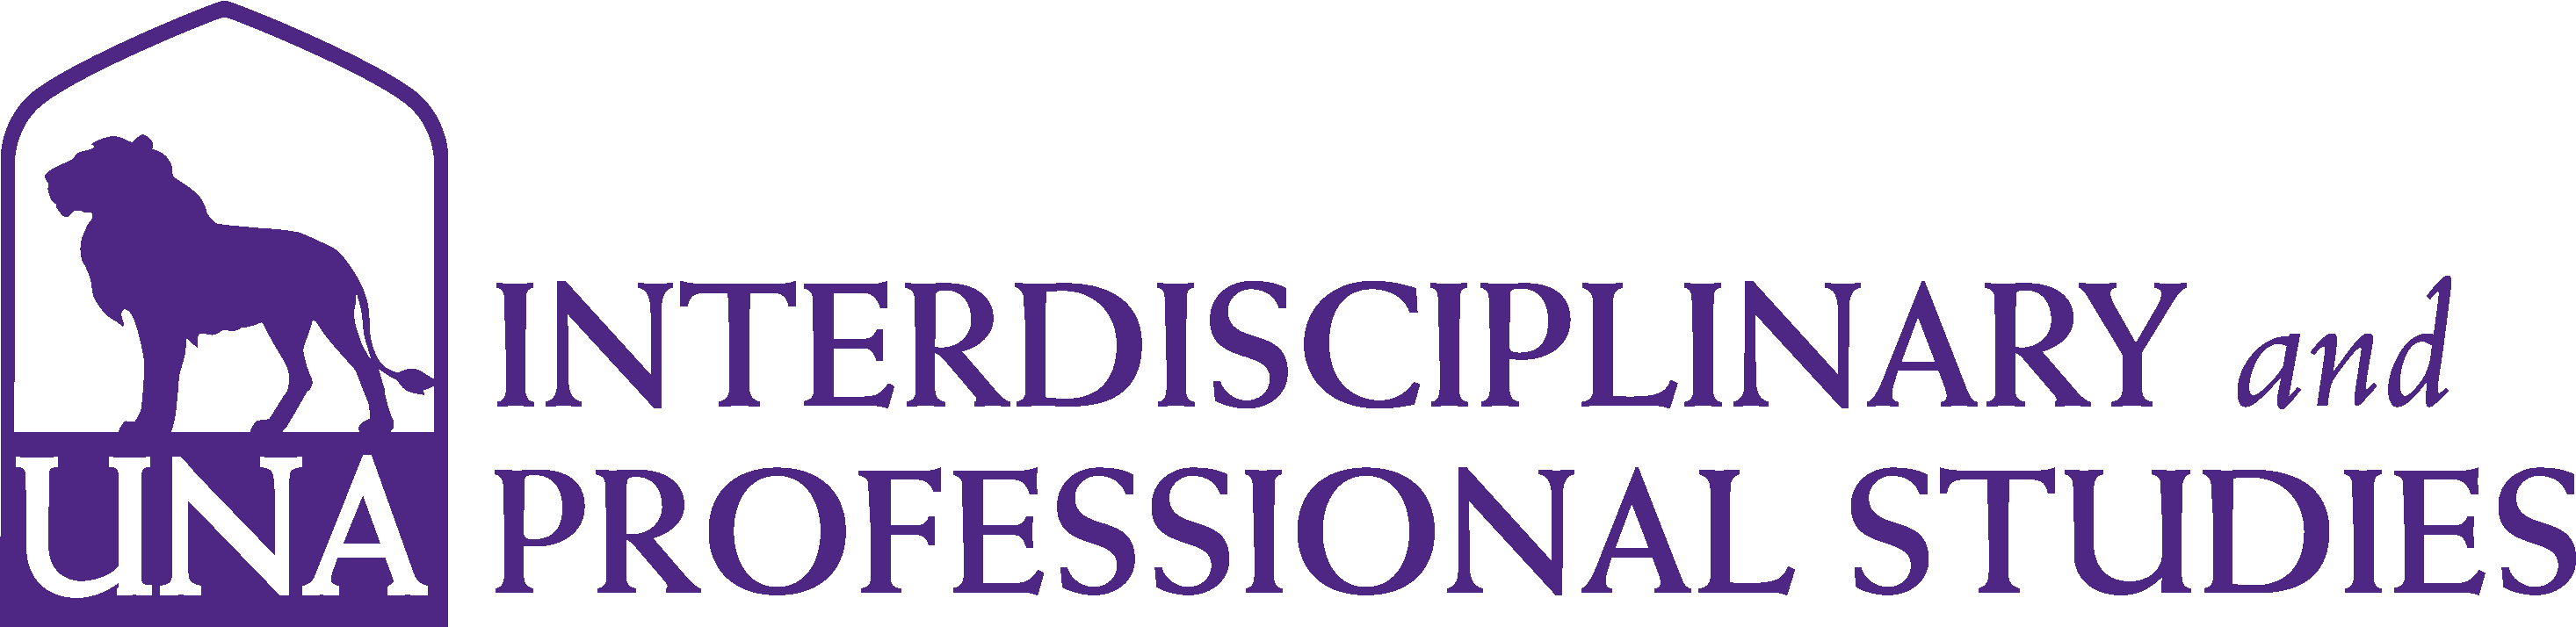 Interdisciplinary and Professional Studies logo 3